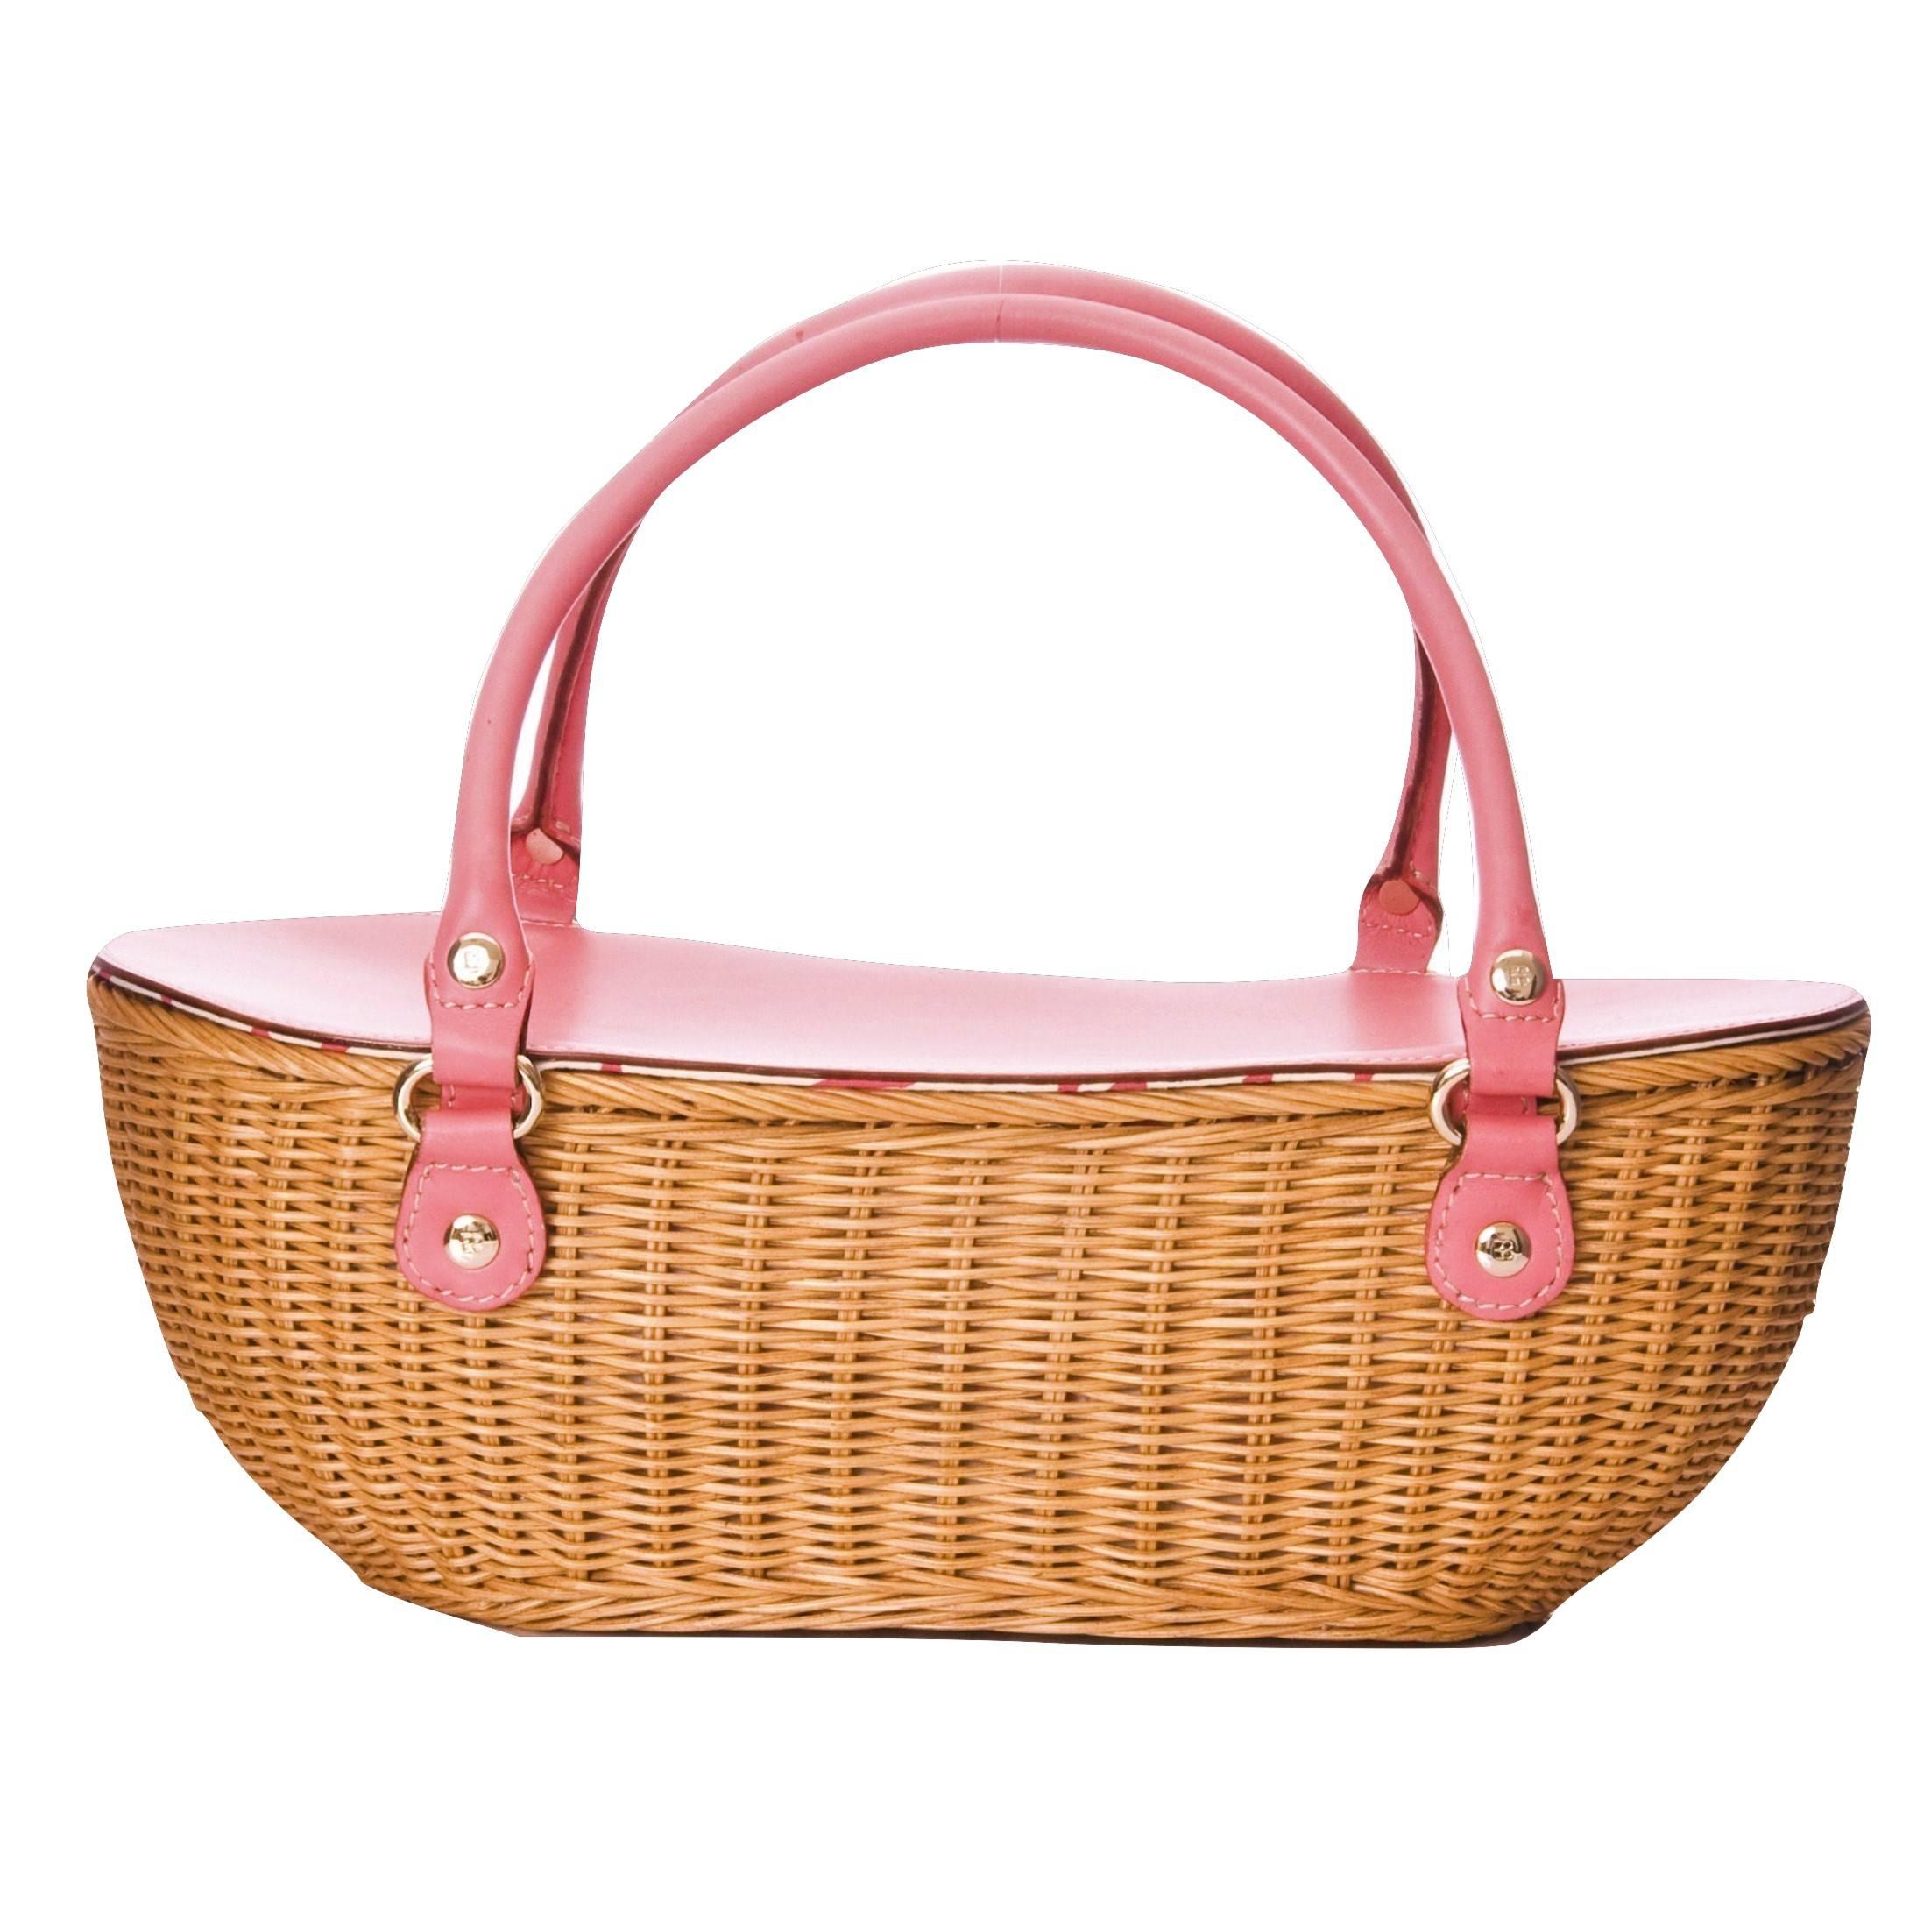 New Kate Spade Spring 2005 Large Pink Wicker Basket Bag  1